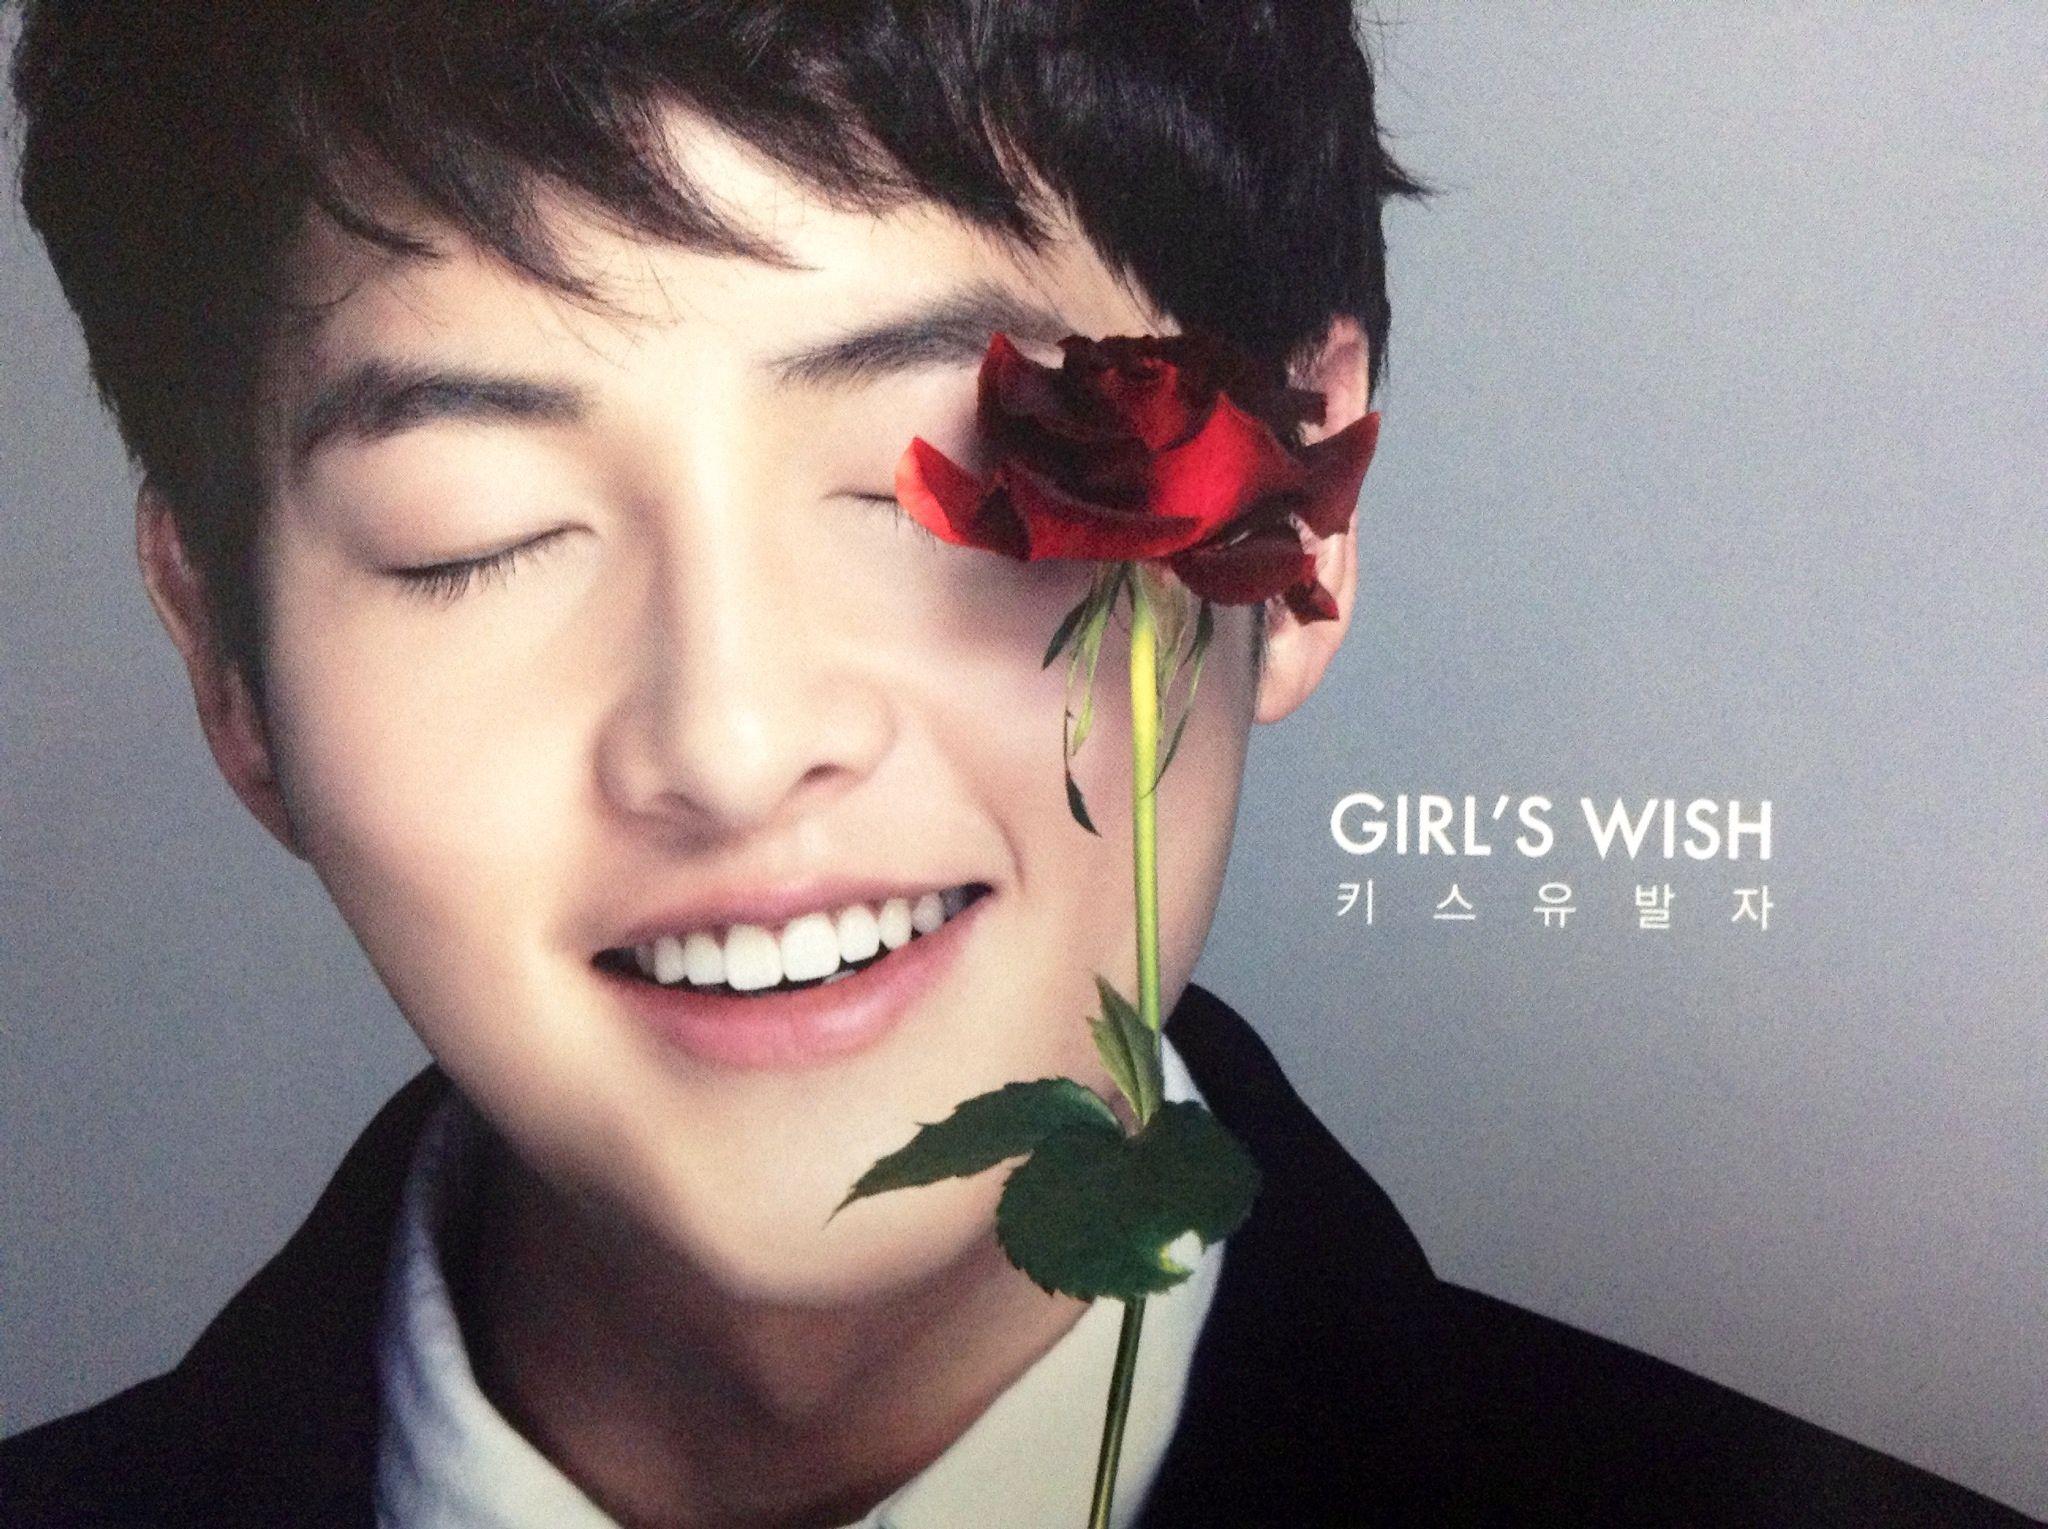 Song Joong Ki Wallpaper High Resolution and Quality Download